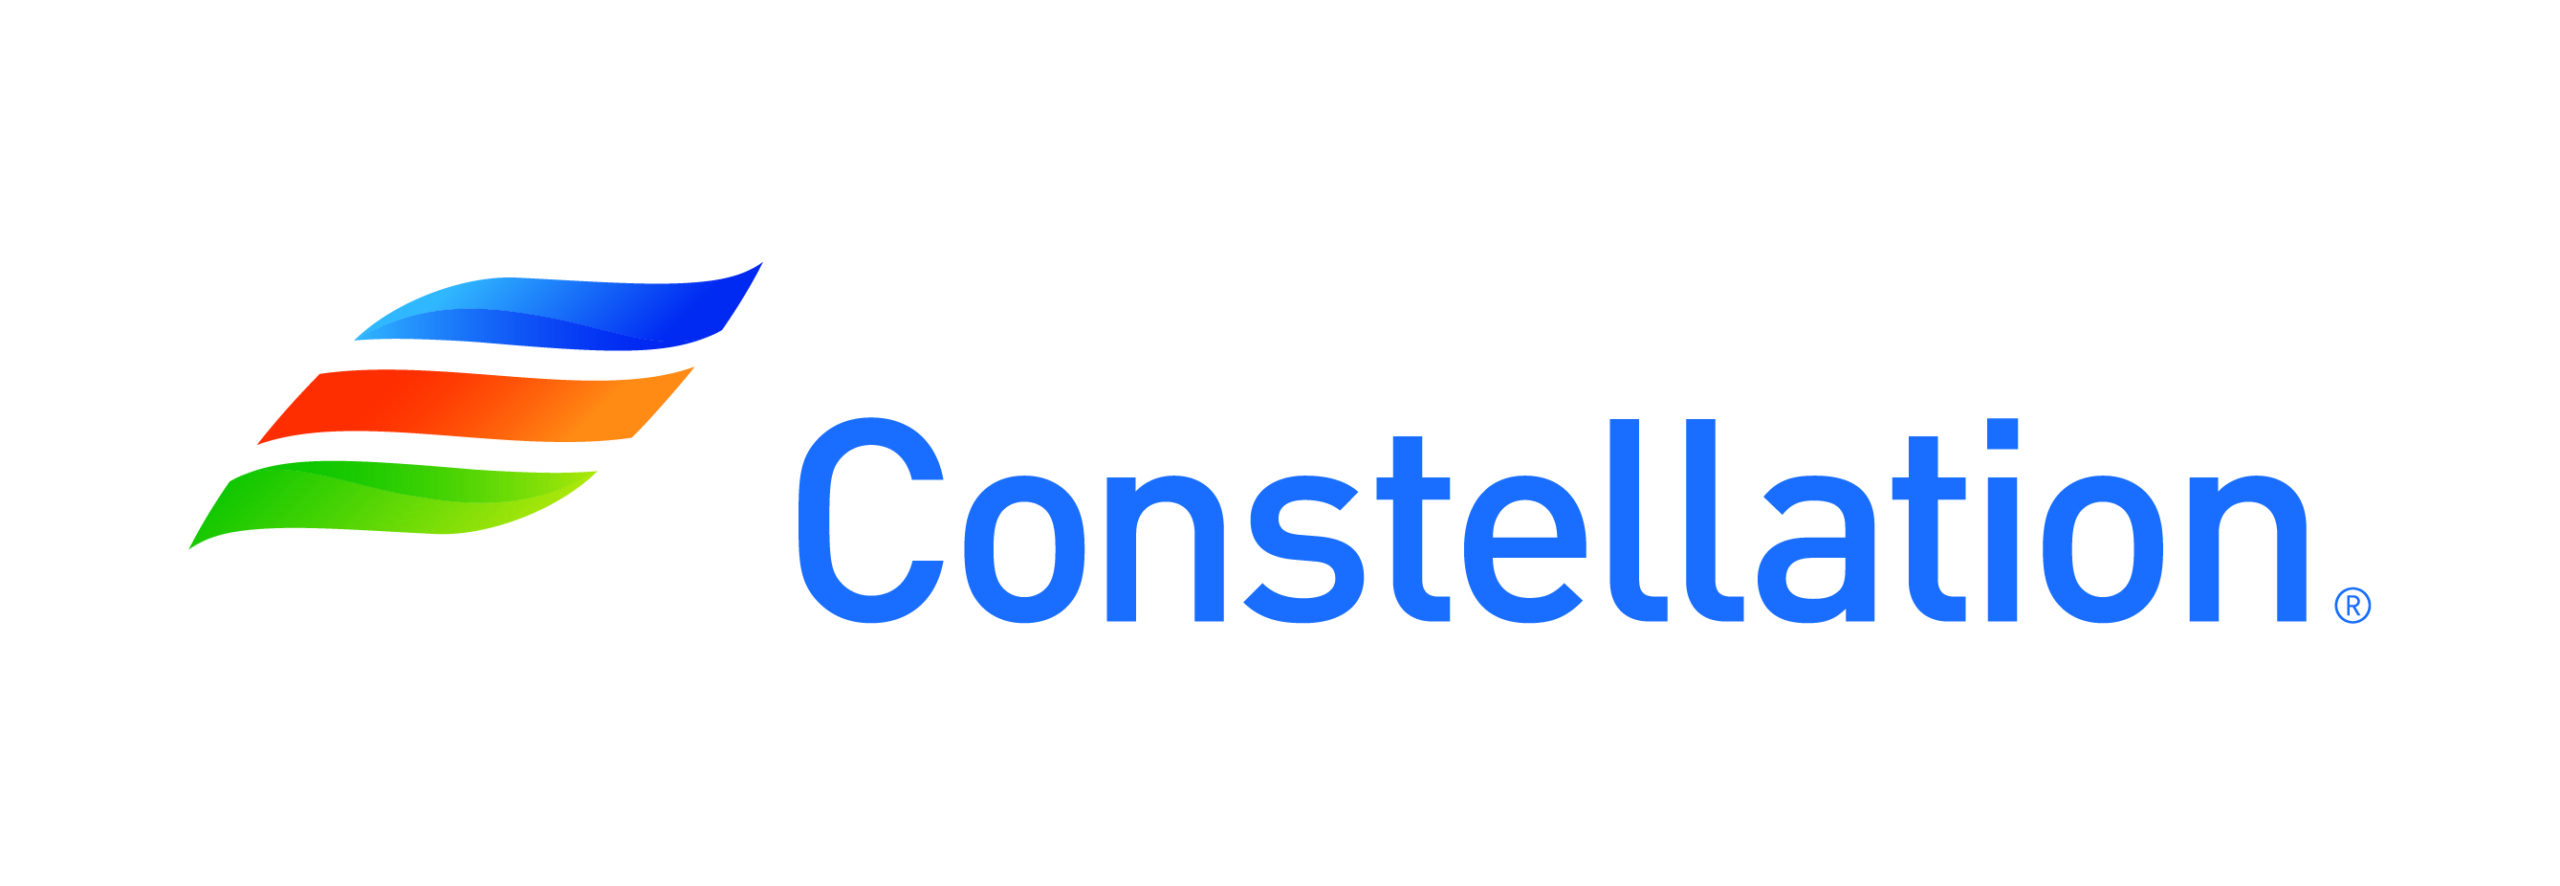 Constellation-logo